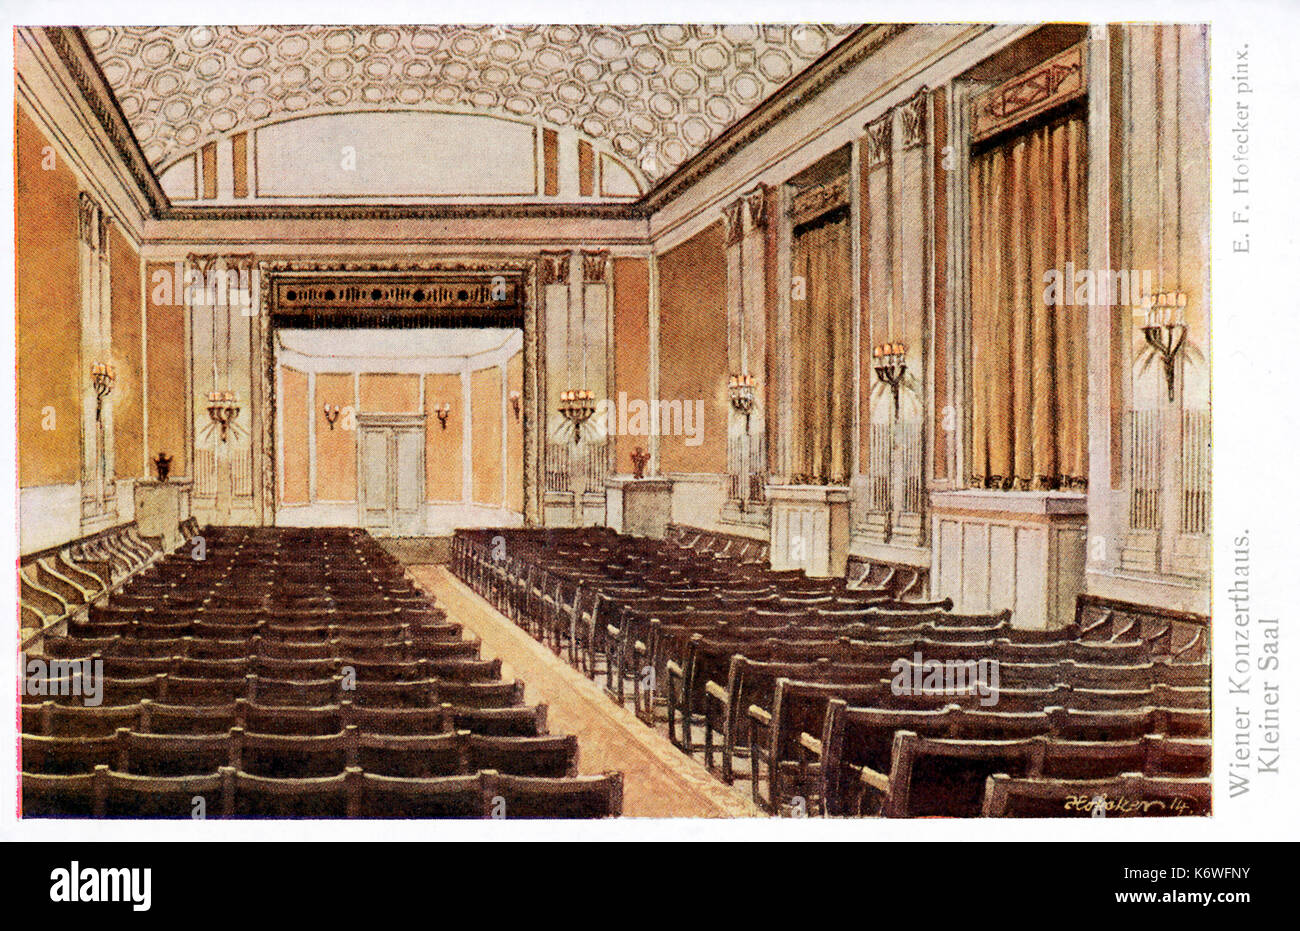 VIENNA - KONZERTHAUS - interior - late 19thC The Concert House (Konzerthaus) - small hall. 2nd main concert hall in Vienna. Stock Photo